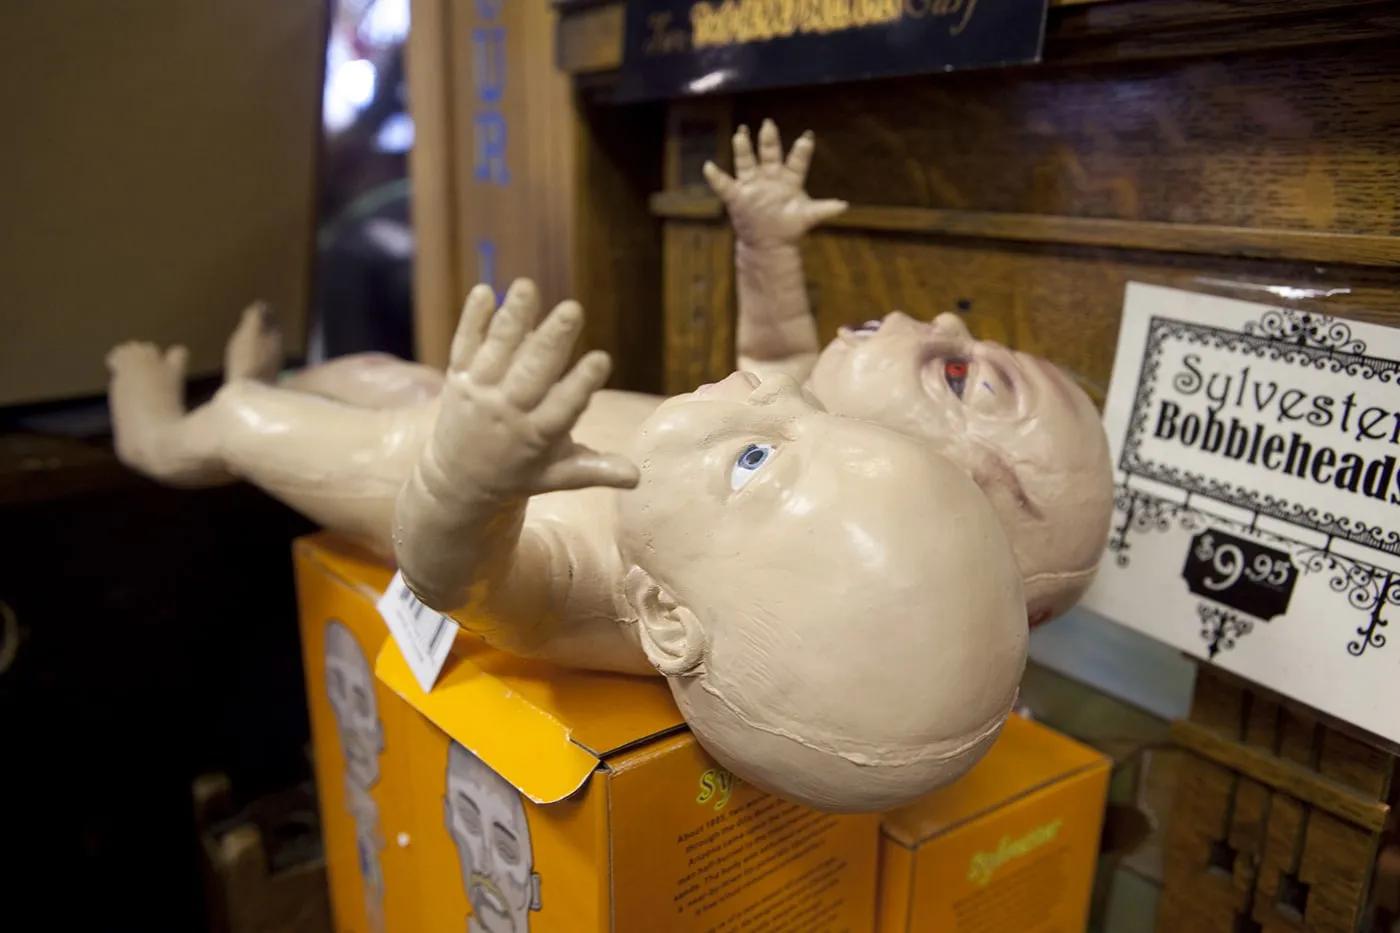 Two-headed baby at Ye Olde Curiosity Shoppe in Seattle, Washington